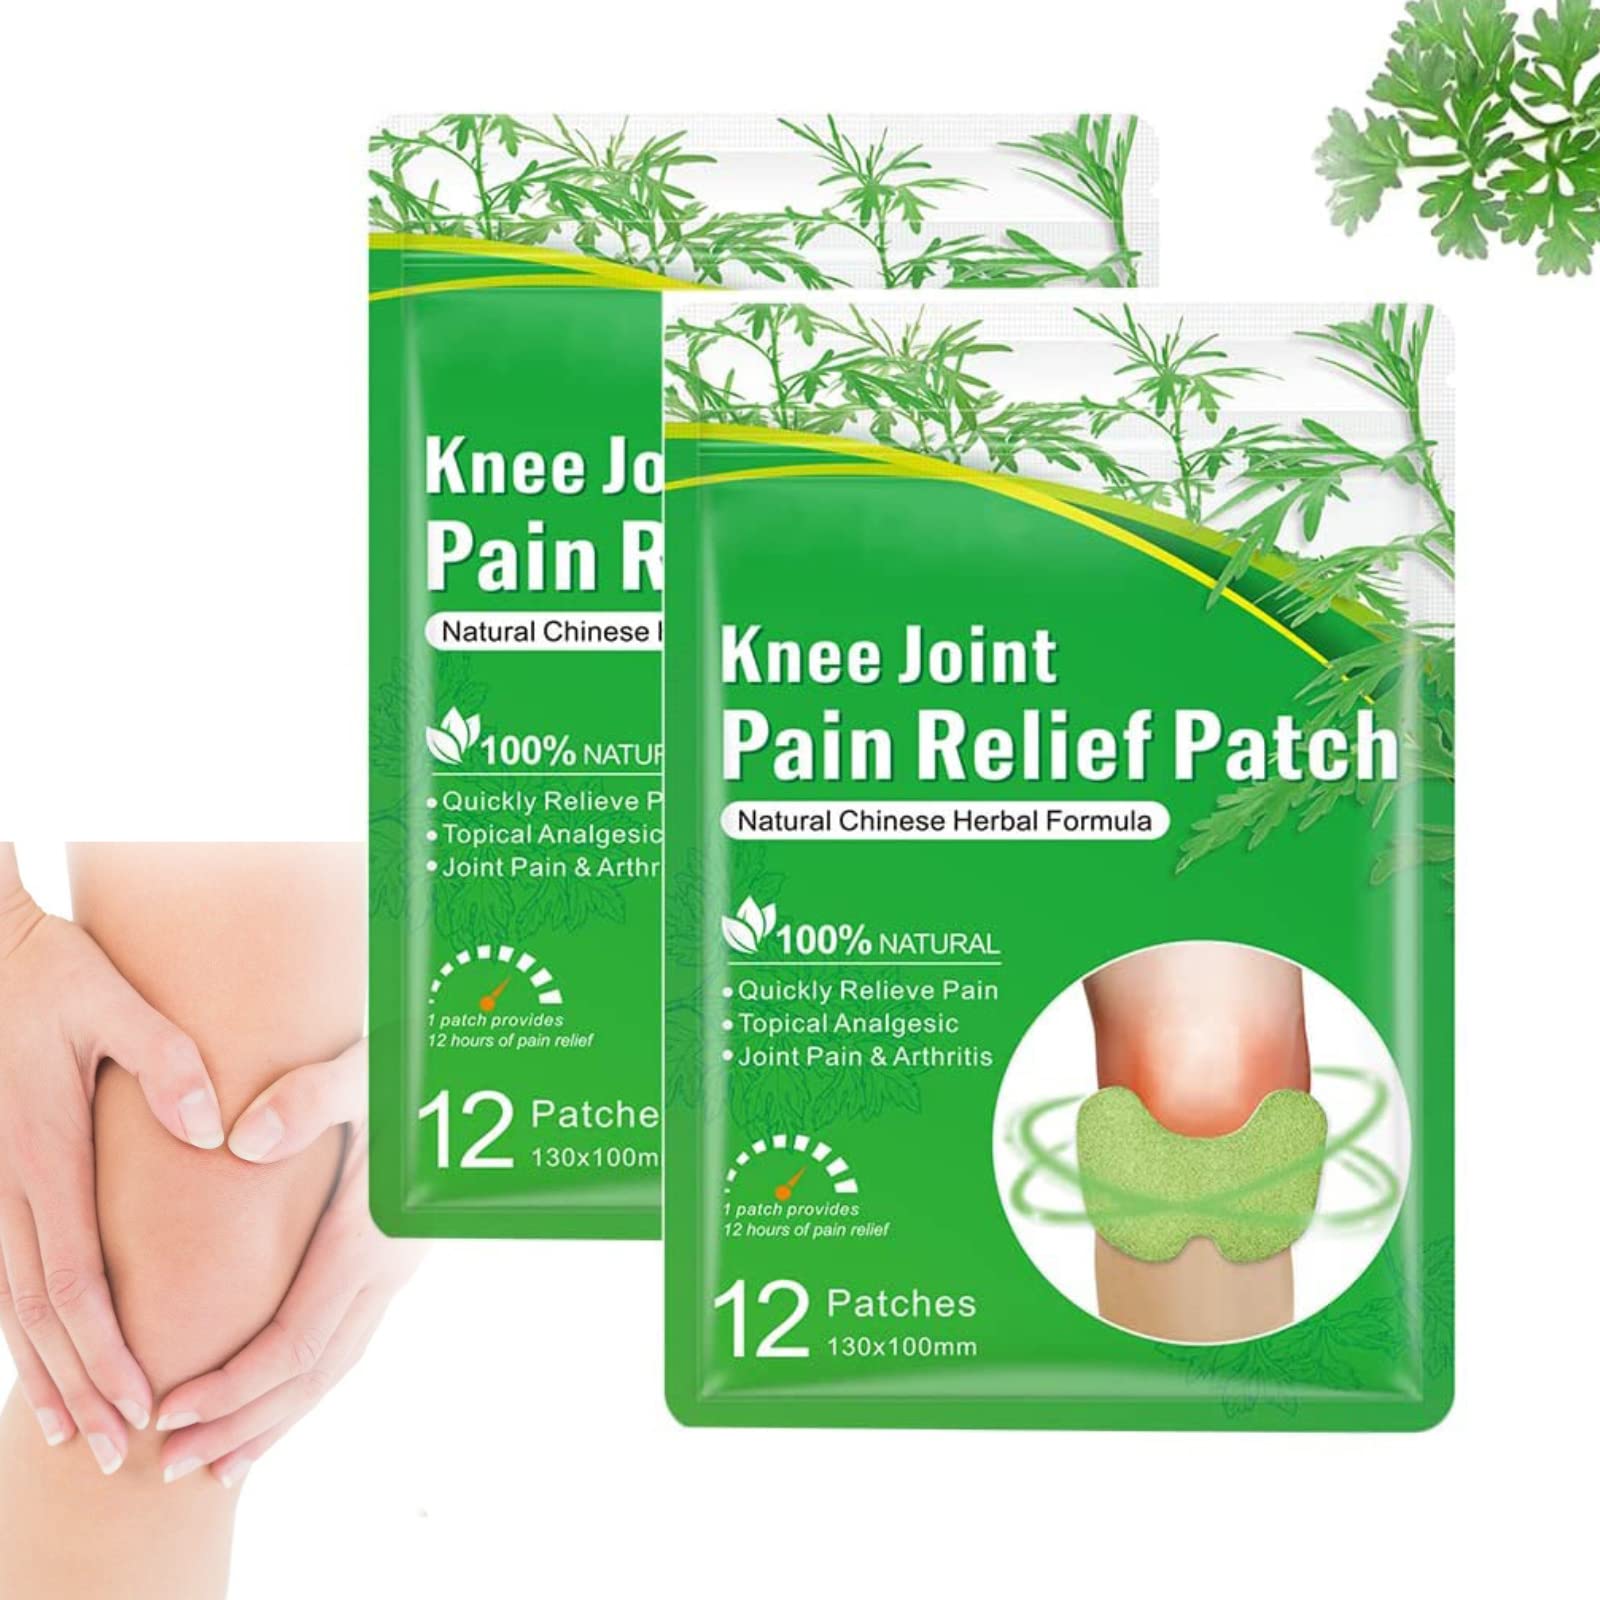 Tupilamc Flexiknee Natural Knee Pain Patch Flexiknee Knee Joint